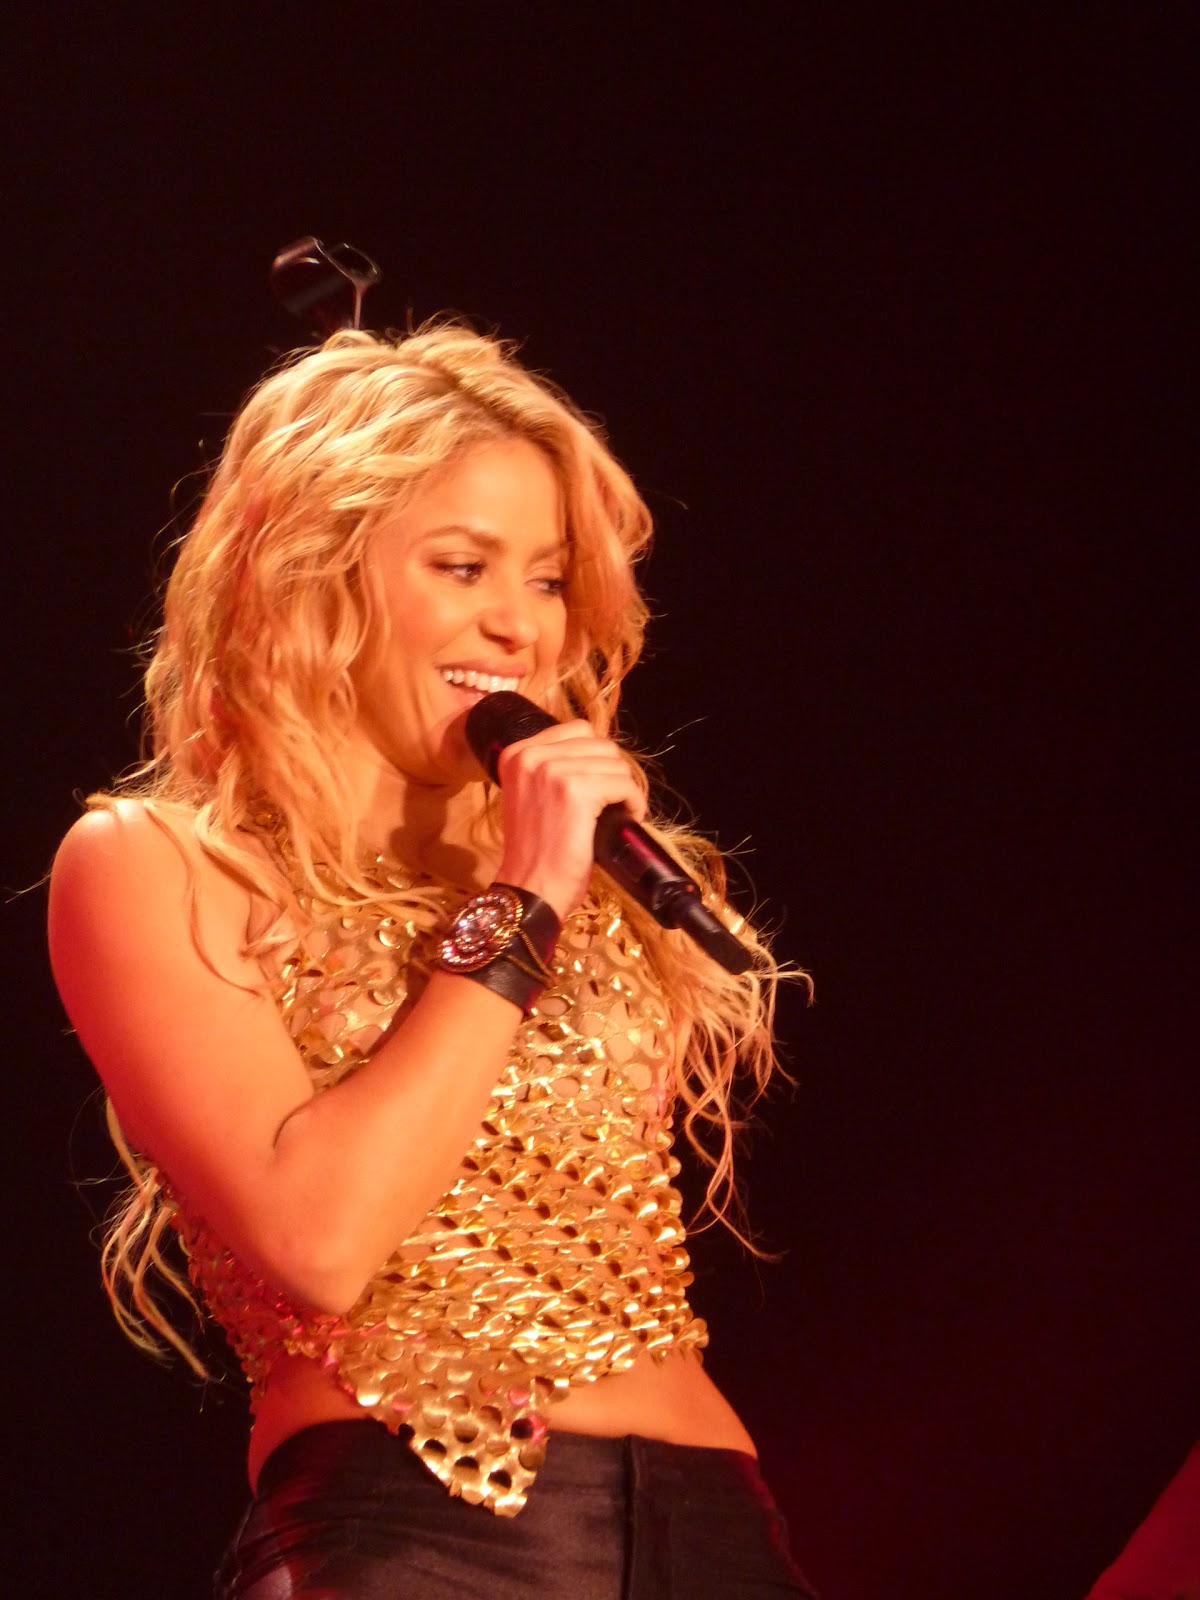 http://2.bp.blogspot.com/-HFw8acwYetU/TiZLHXfu67I/AAAAAAAAAds/pTIJzvoWcdE/s1600/Shakira+-+Loca+2.jpg